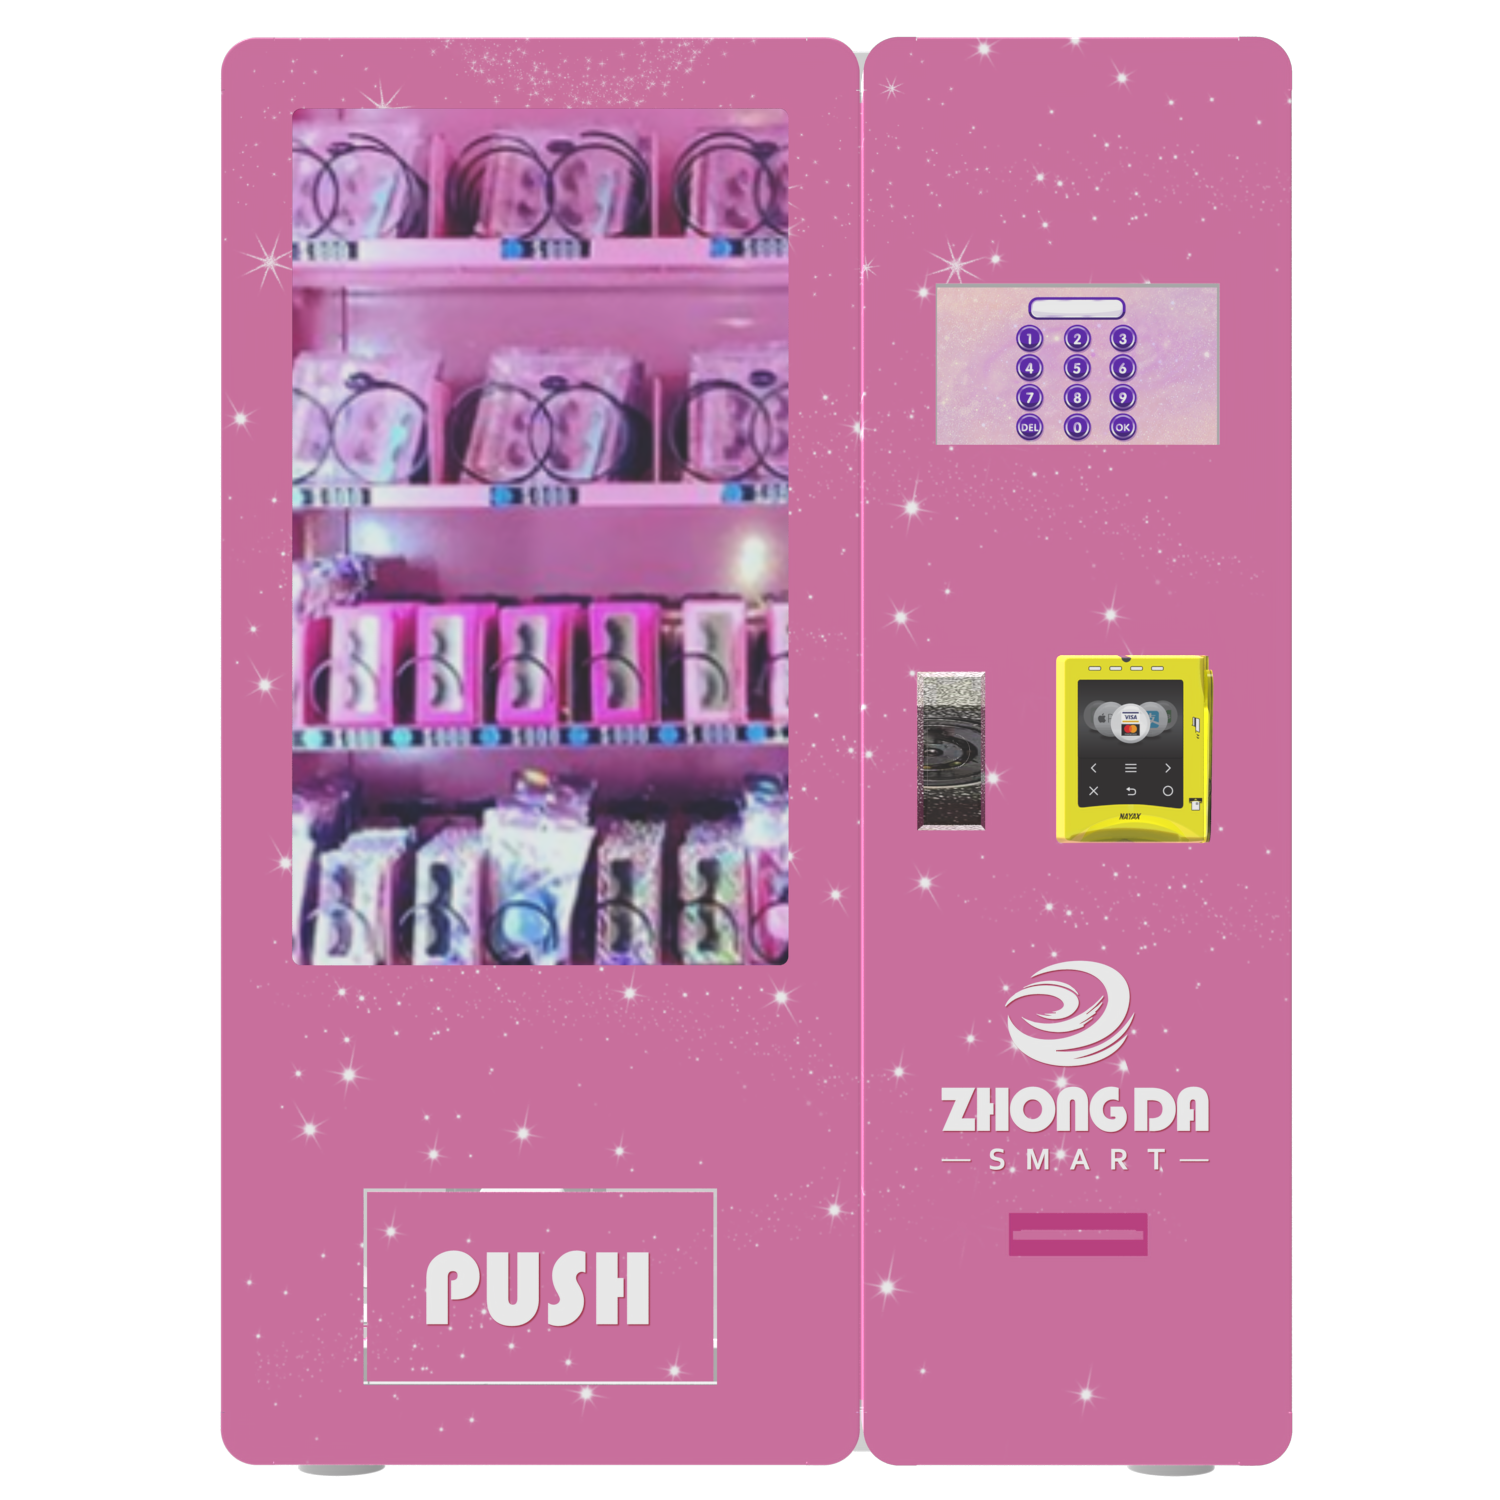 Vending machines for sale Mini vending machine 7 in